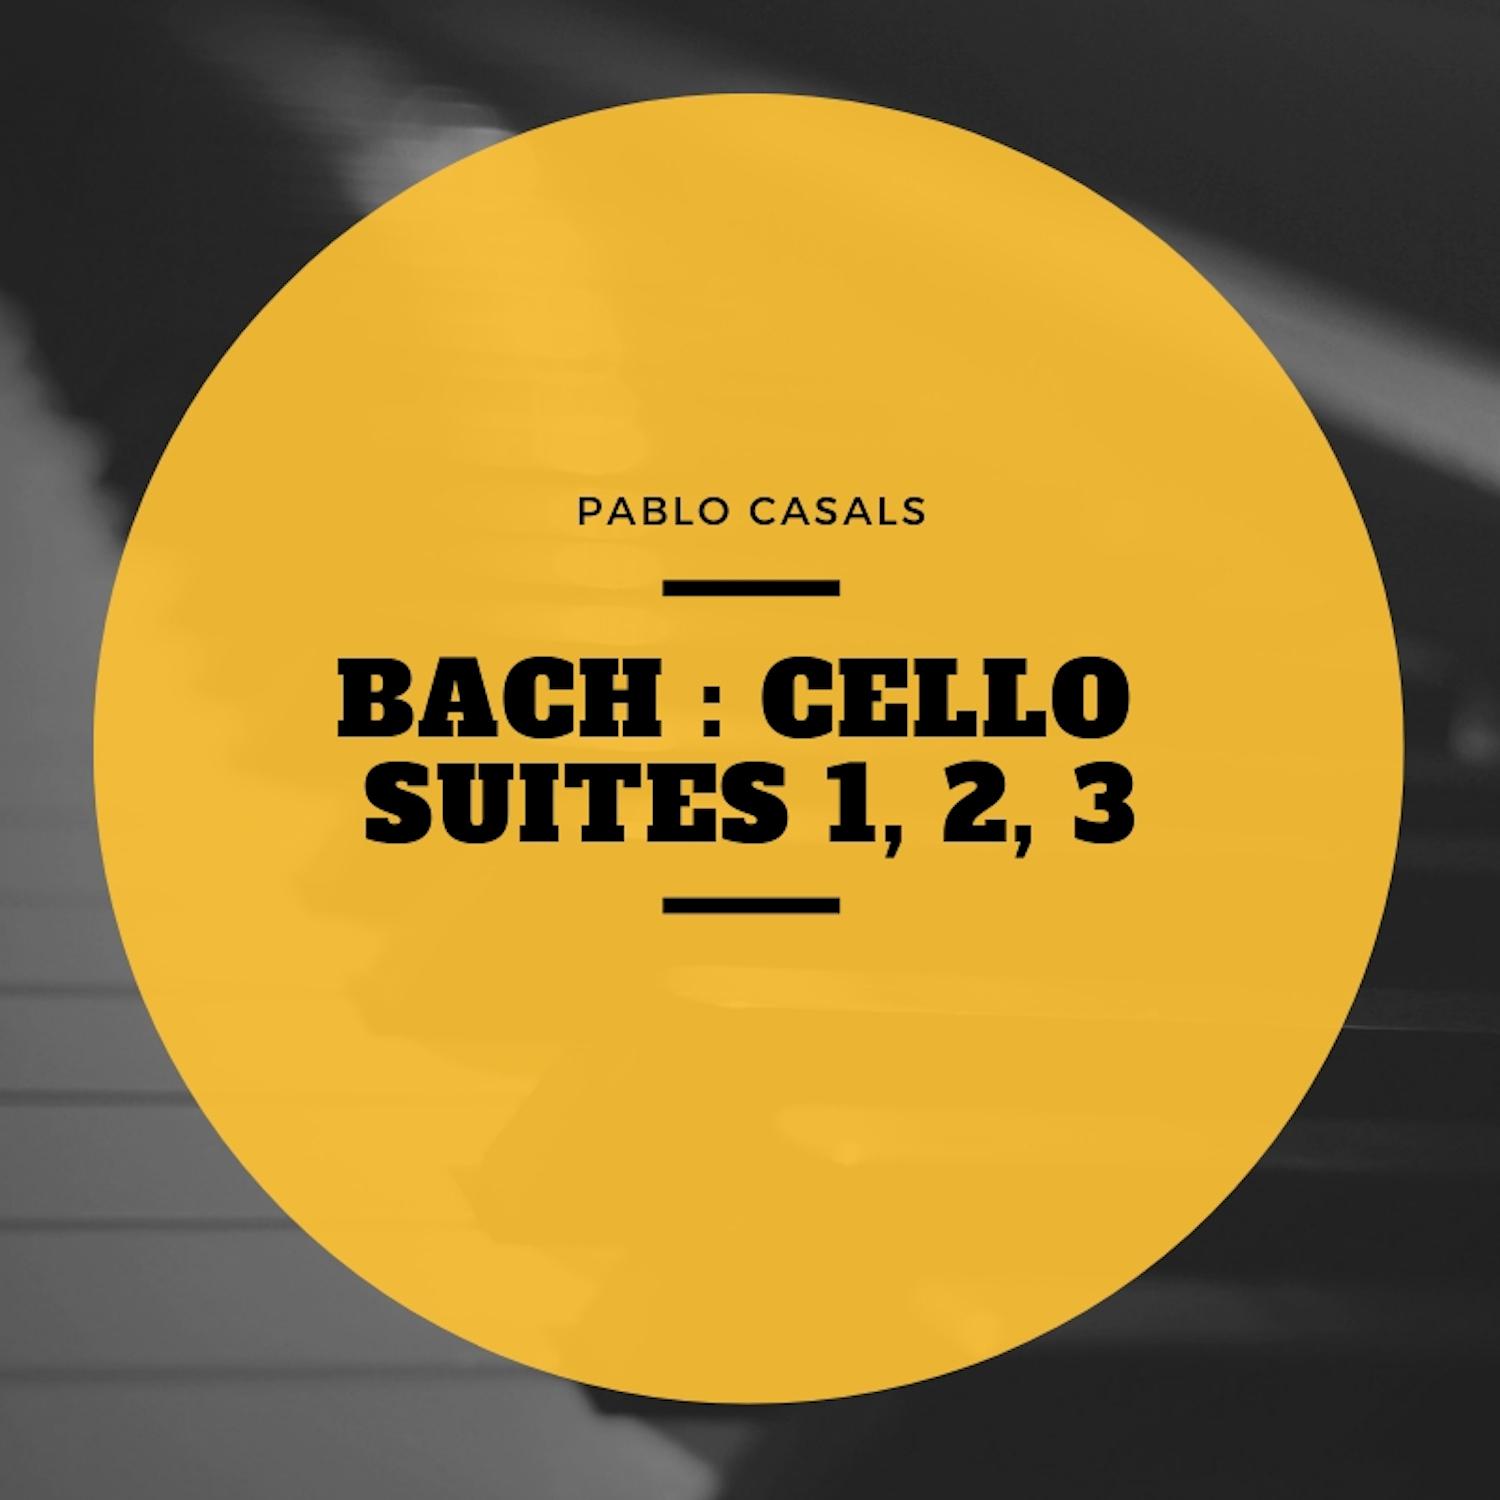 Cello Suite No. 1 In G major, BWV 1007 : III. Courante, Allegro non troppo